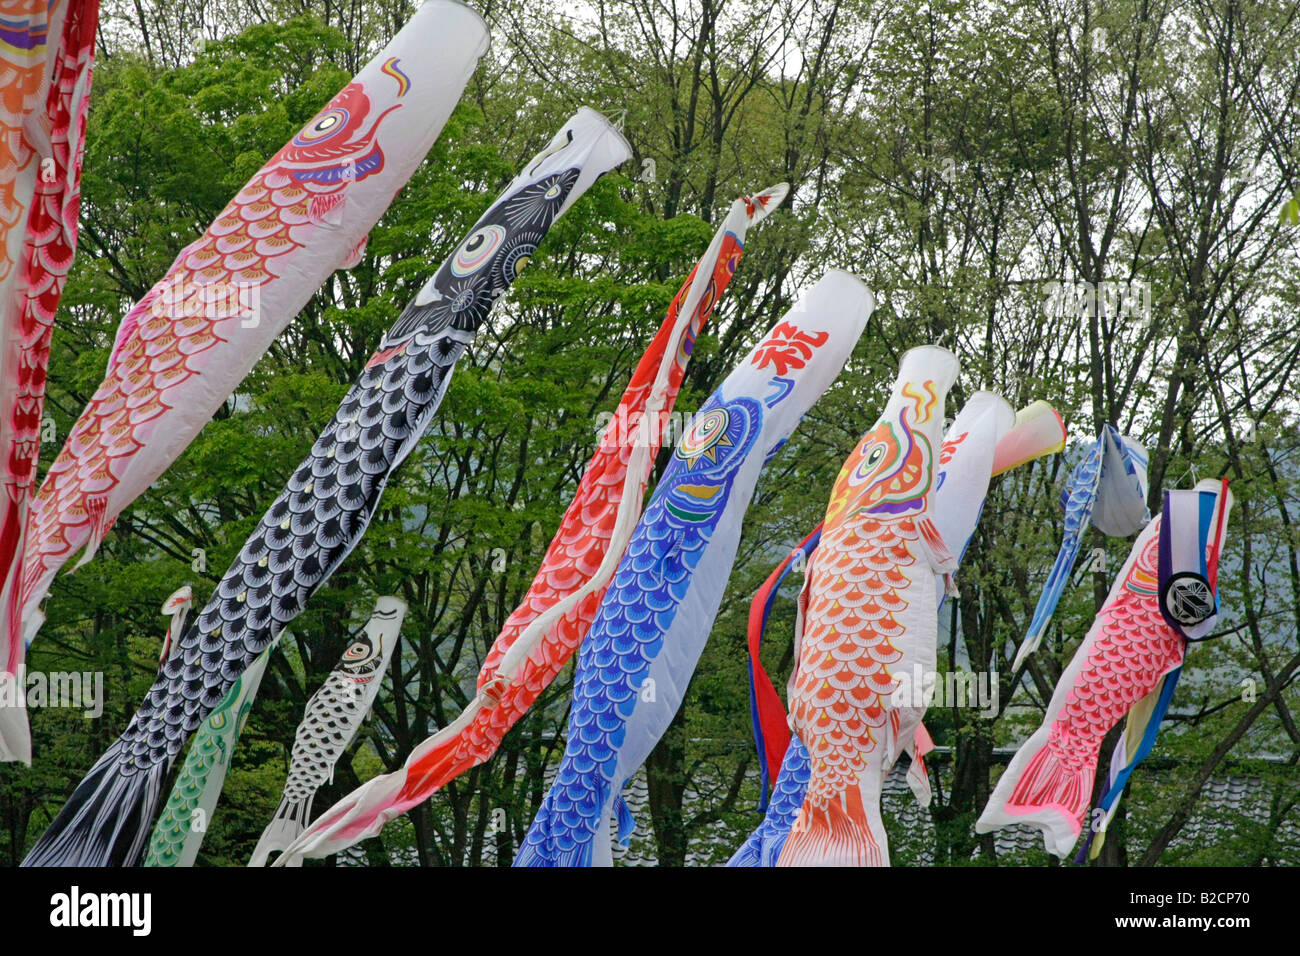 Carp Streamers(Koinobori) flying at a park in Kawaba mura village Gunma Japan Stock Photo